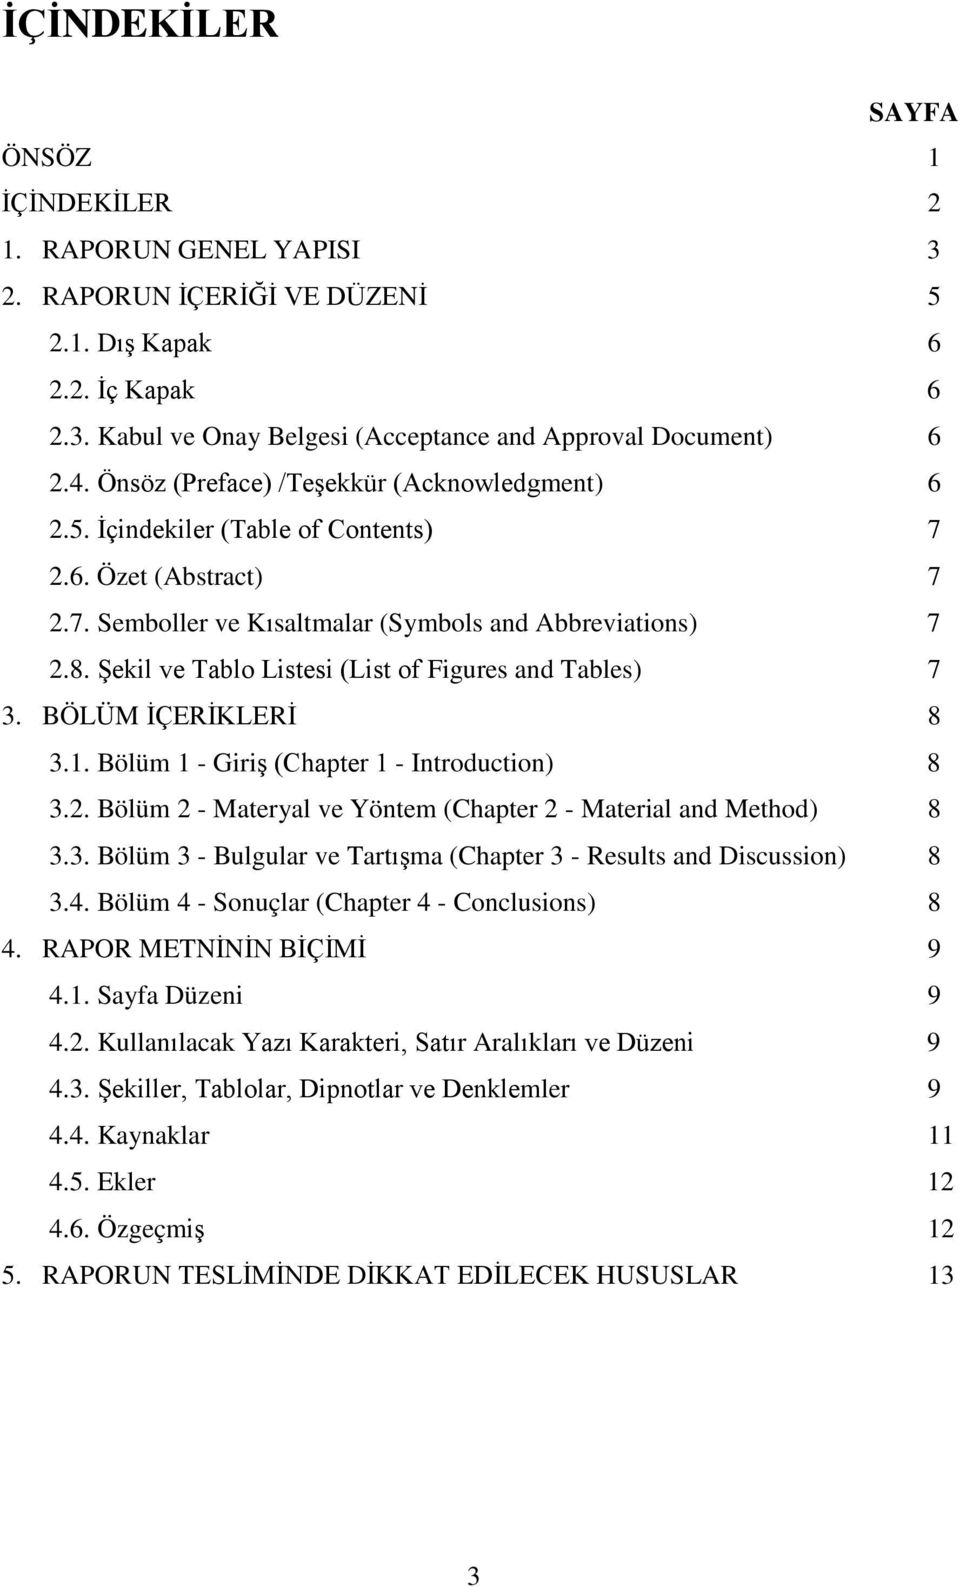 Şekil ve Tablo Listesi (List of Figures and Tables) 7 3. BÖLÜM İÇERİKLERİ 8 3.1. Bölüm 1 - Giriş (Chapter 1 - Introduction) 8 3.2. Bölüm 2 - Materyal ve Yöntem (Chapter 2 - Material and Method) 8 3.3. Bölüm 3 - Bulgular ve Tartışma (Chapter 3 - Results and Discussion) 8 3.